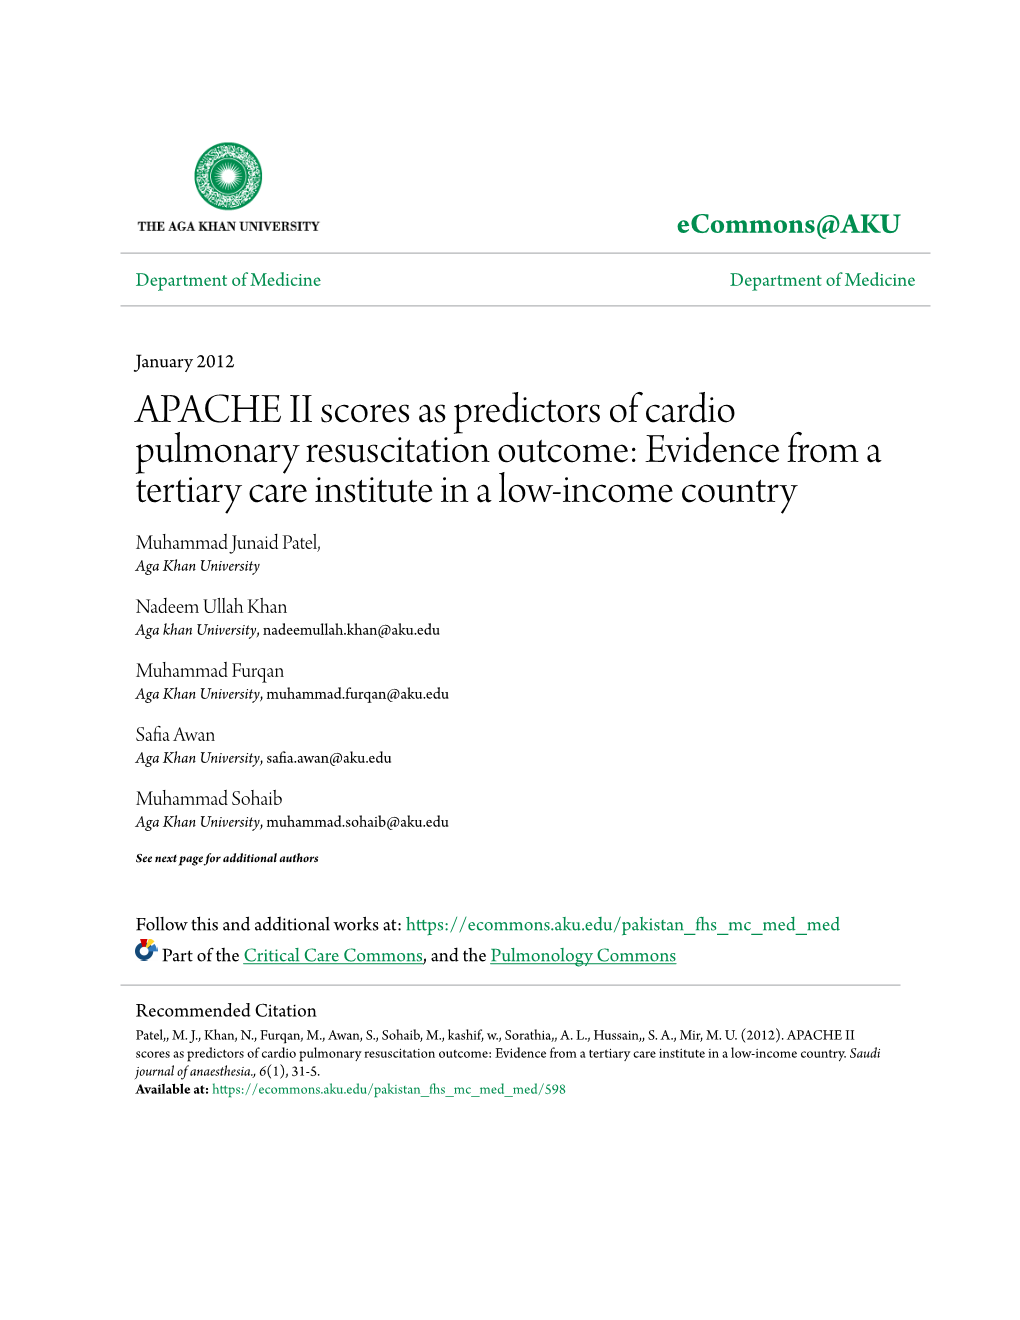 APACHE II Scores As Predictors of Cardio